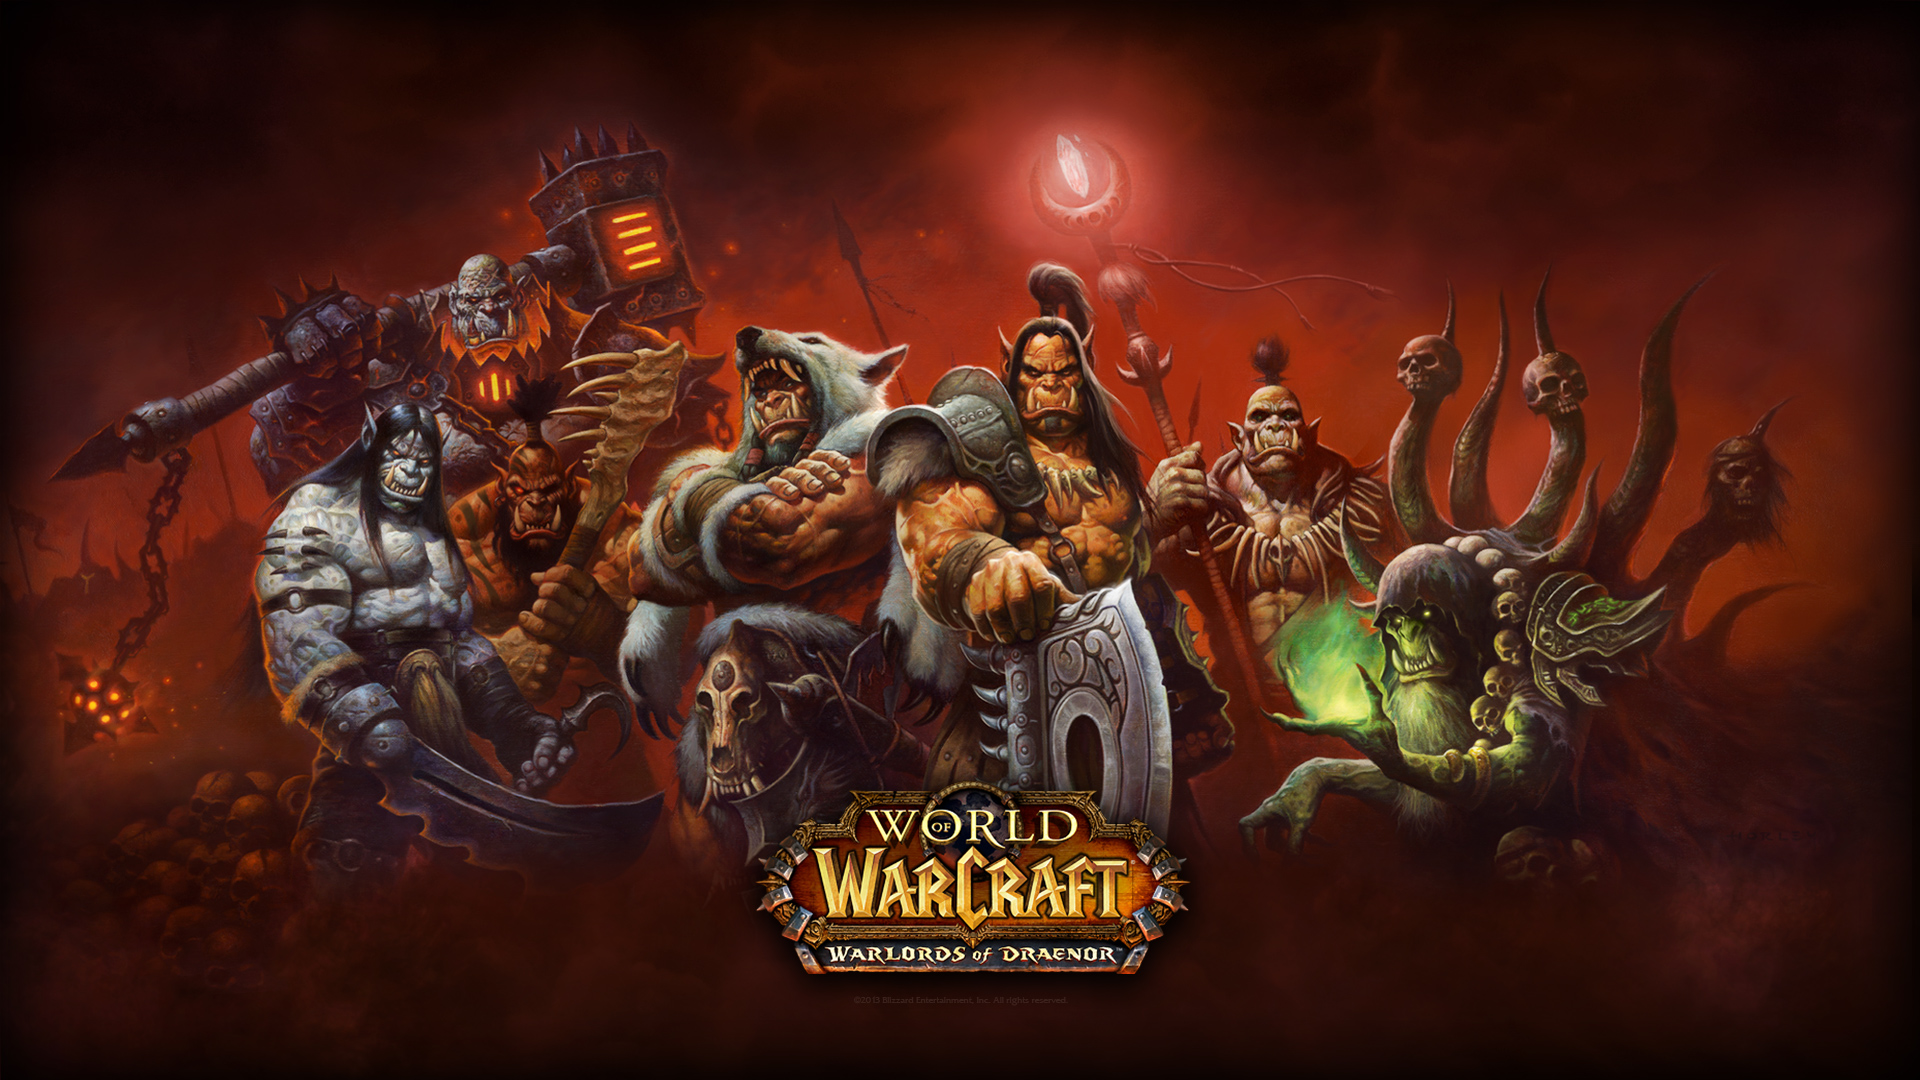  of Draenor World of Warcraft Wallpaper No 3014   wallhavencc